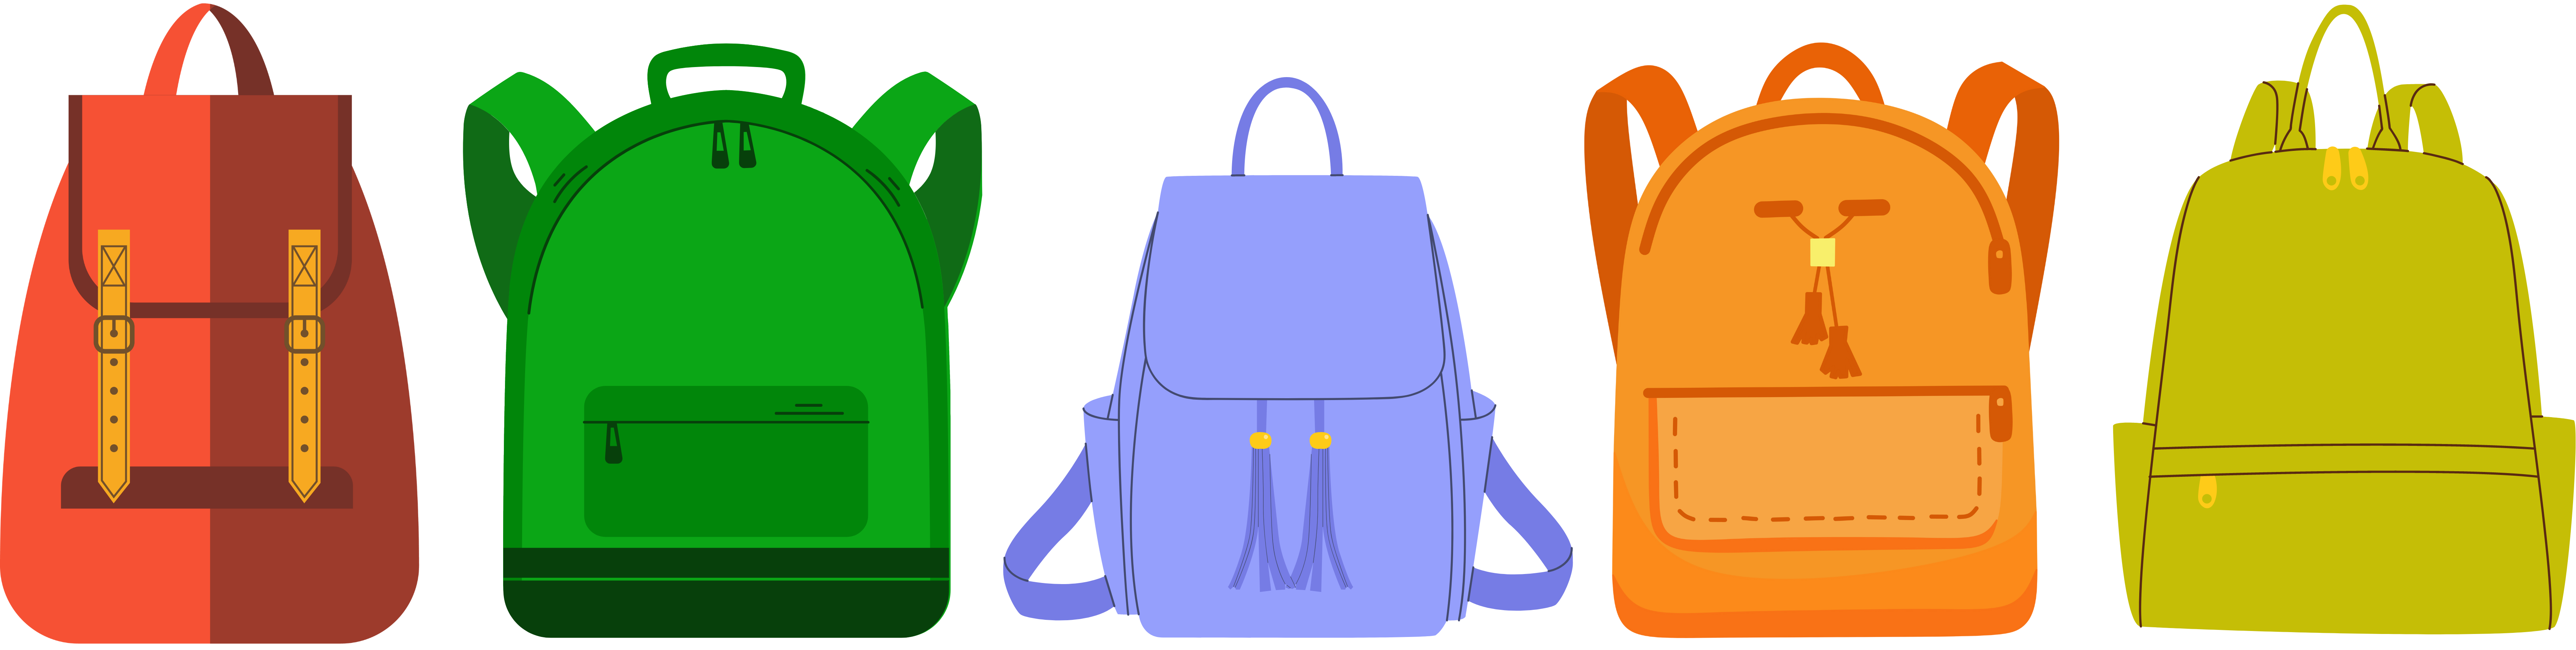 backpack-clipart - Eleanor Hall School